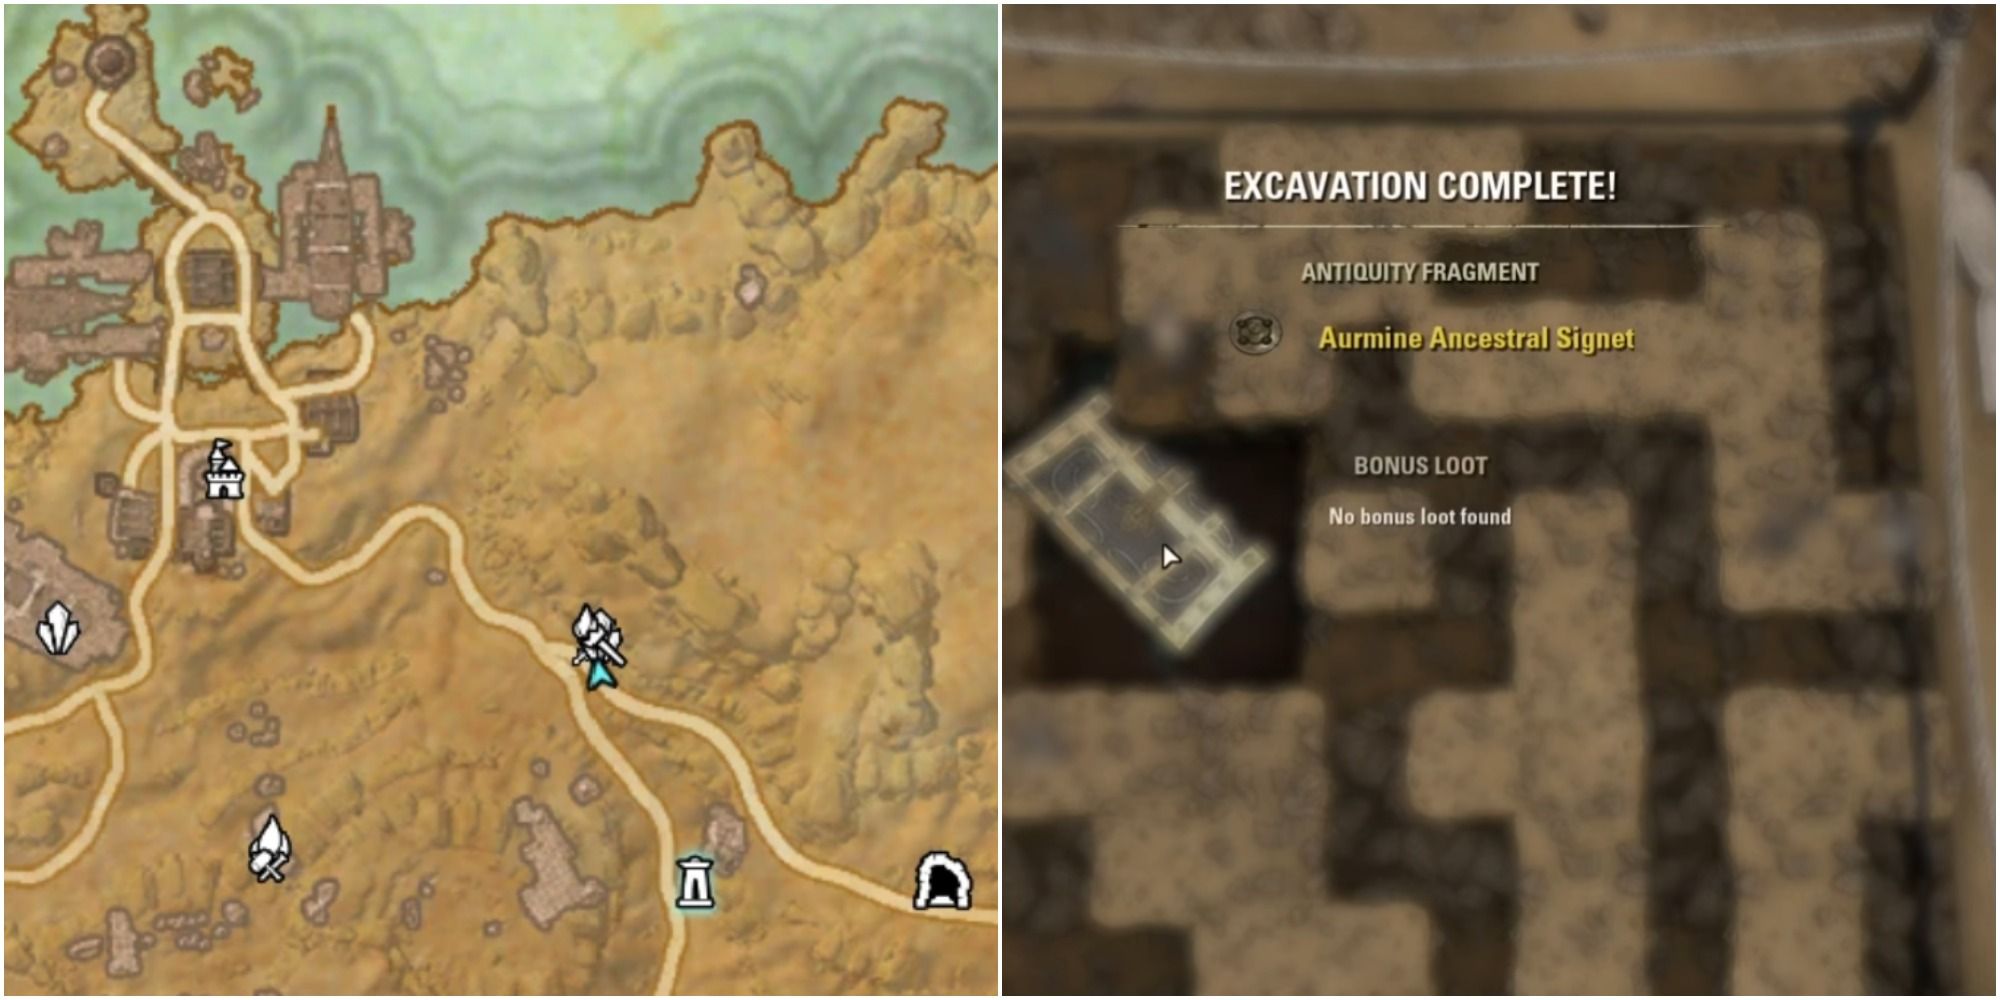 Elder Scrolls Online Alik'r Desert Map And An Excavation Site